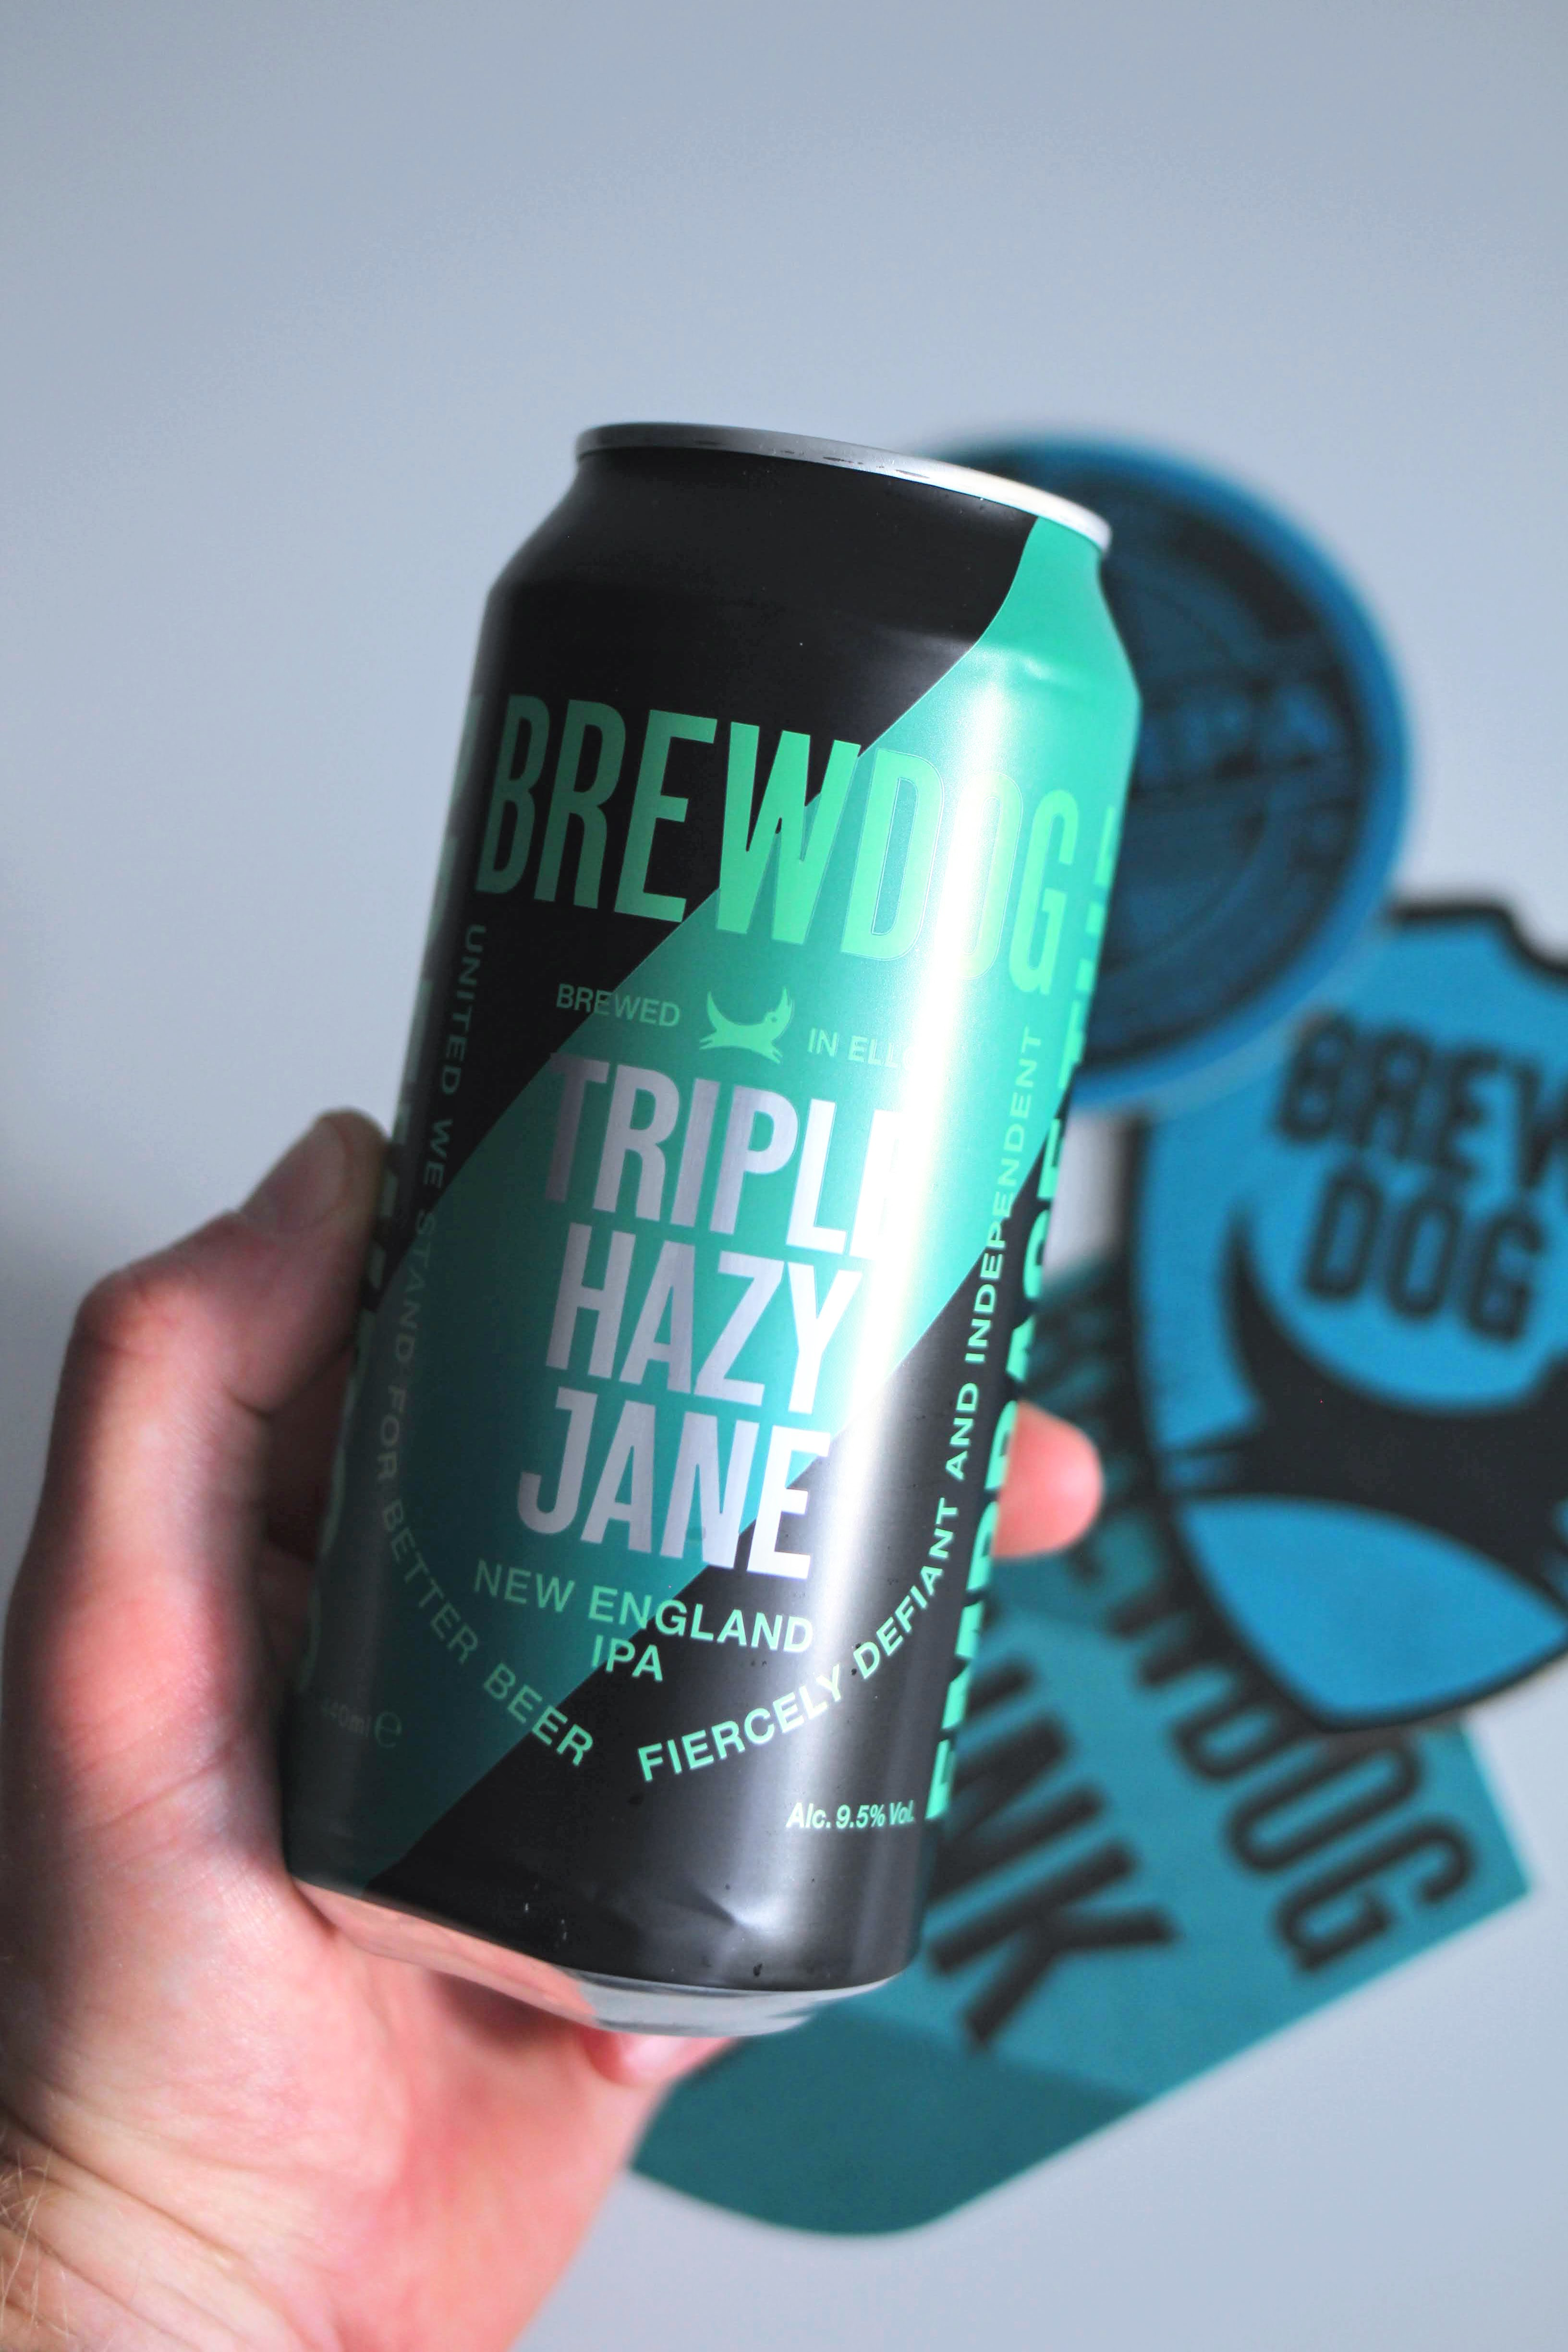 Beer: BrewDog - Triple Hazy Jane, New England IPA by IPAokay